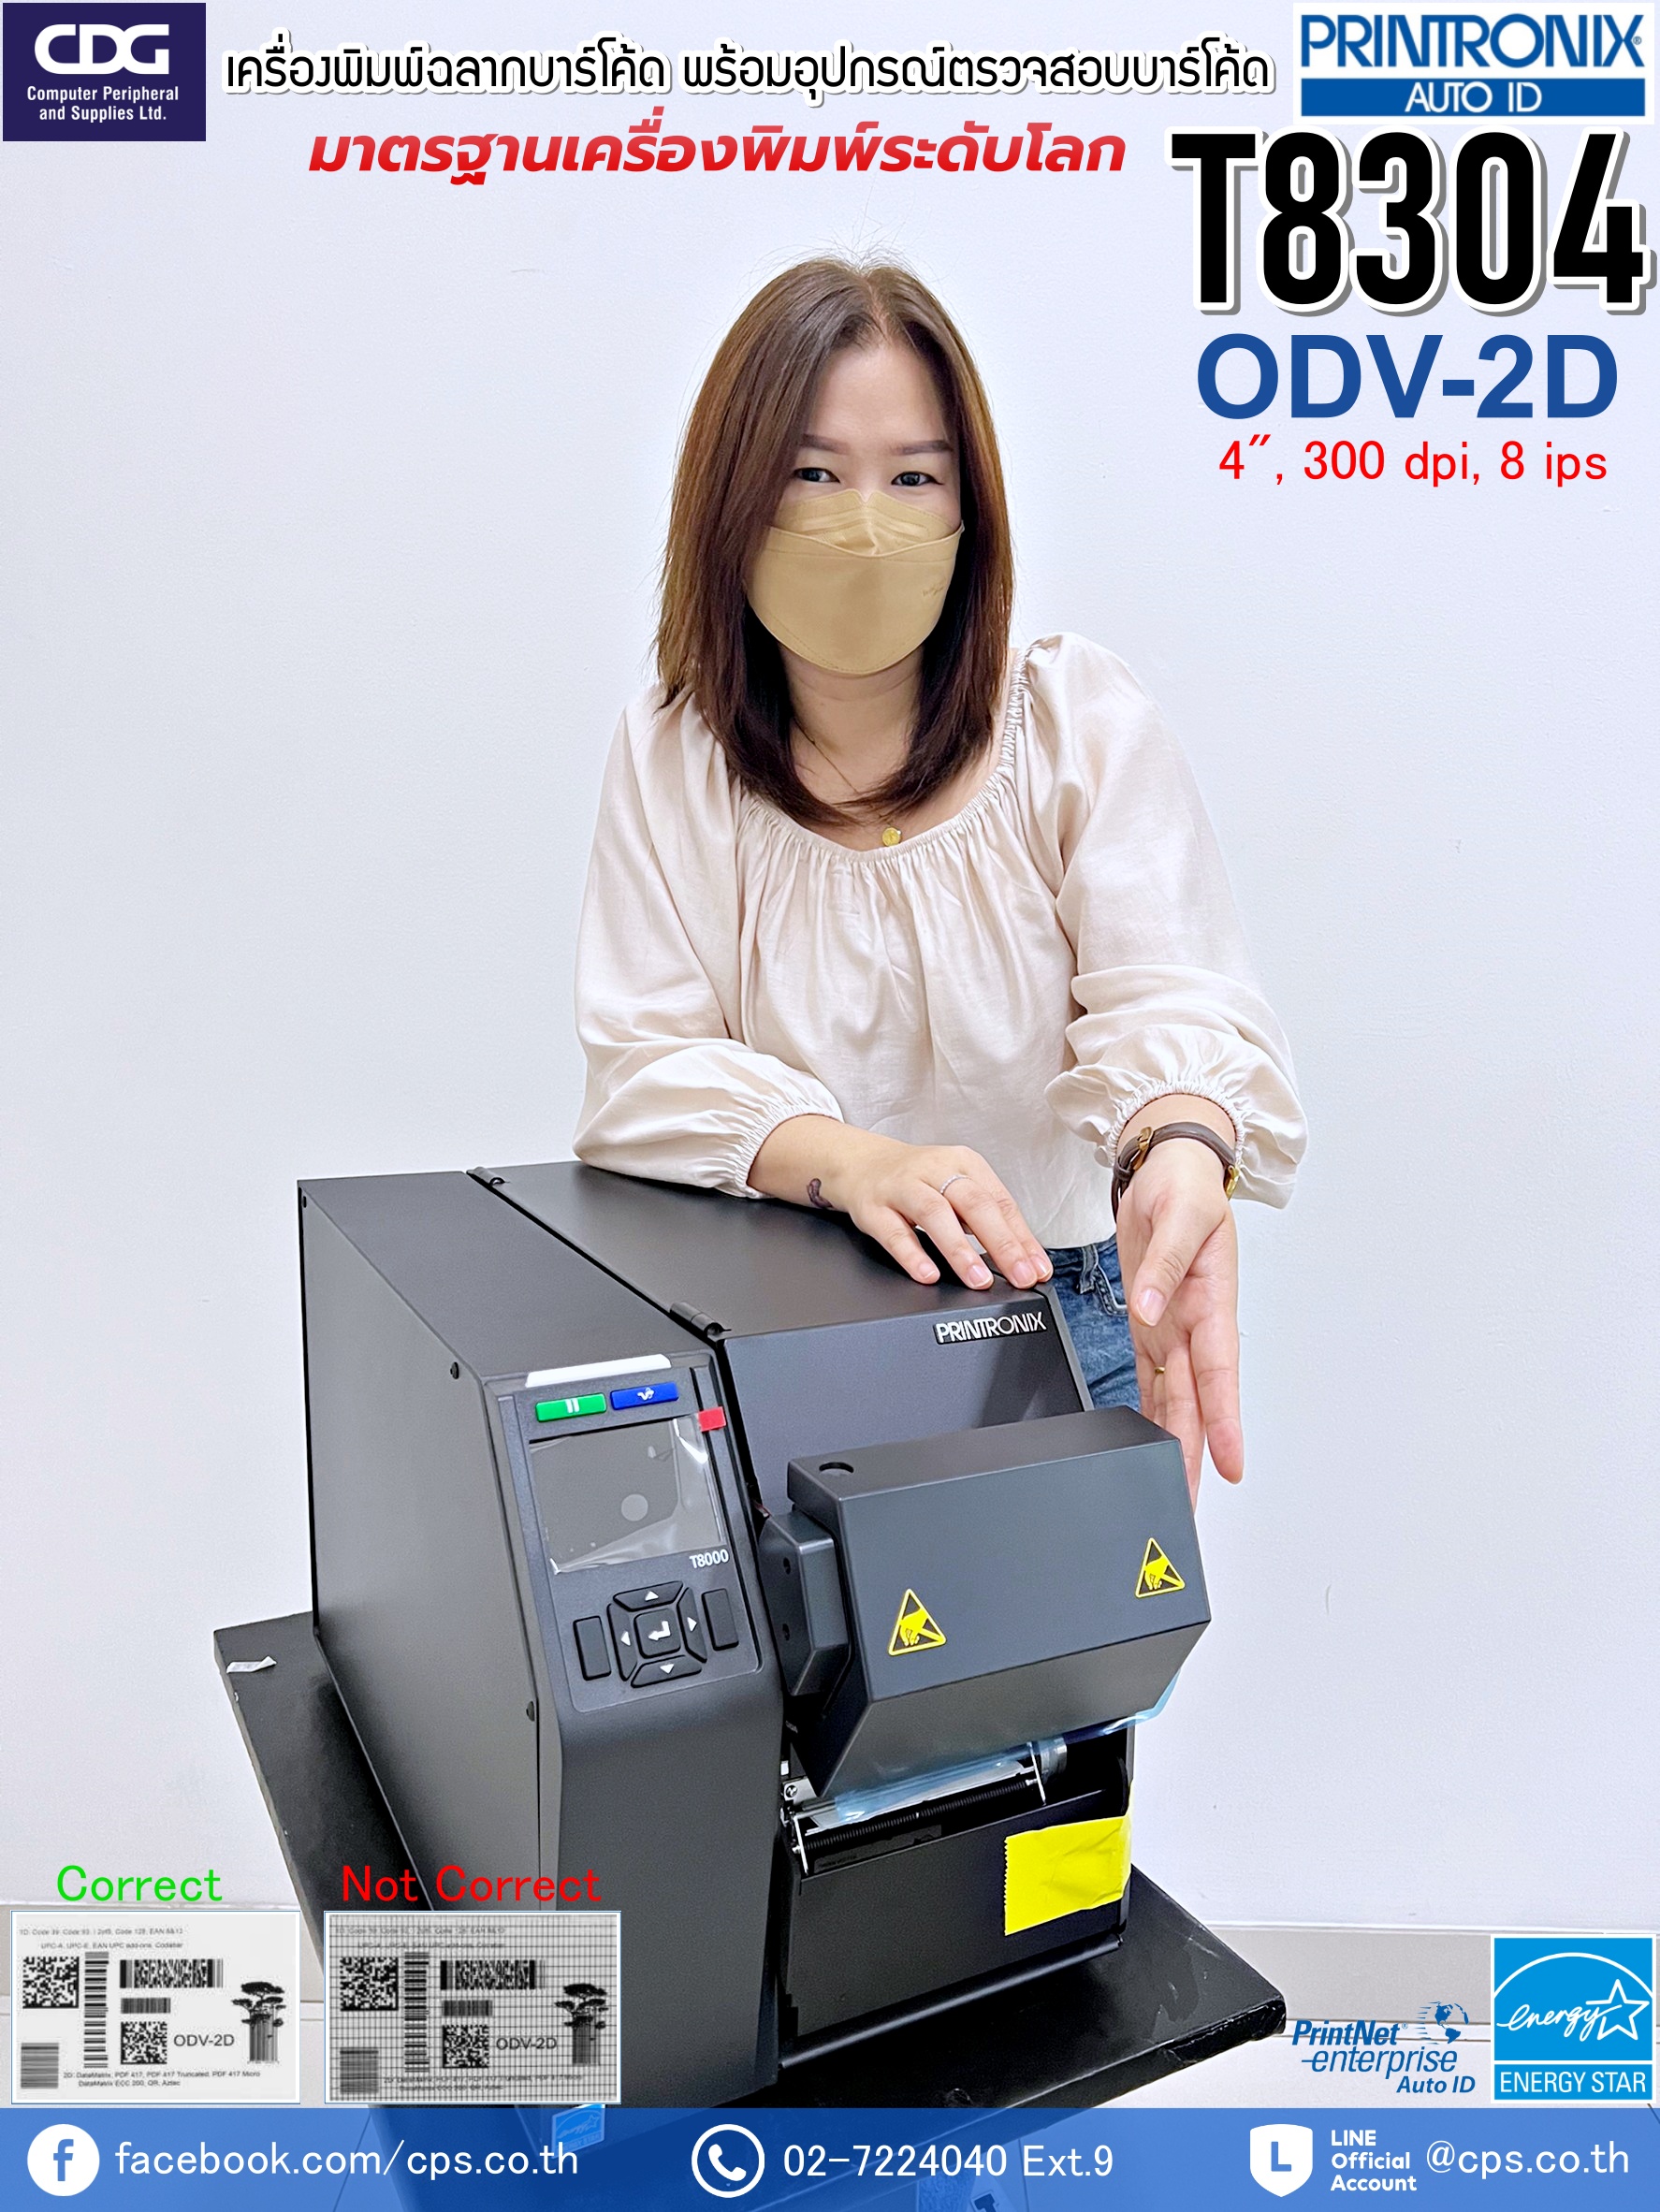 Printronix T8304e + ODV-2D Thermal Barcode Printer/Validator